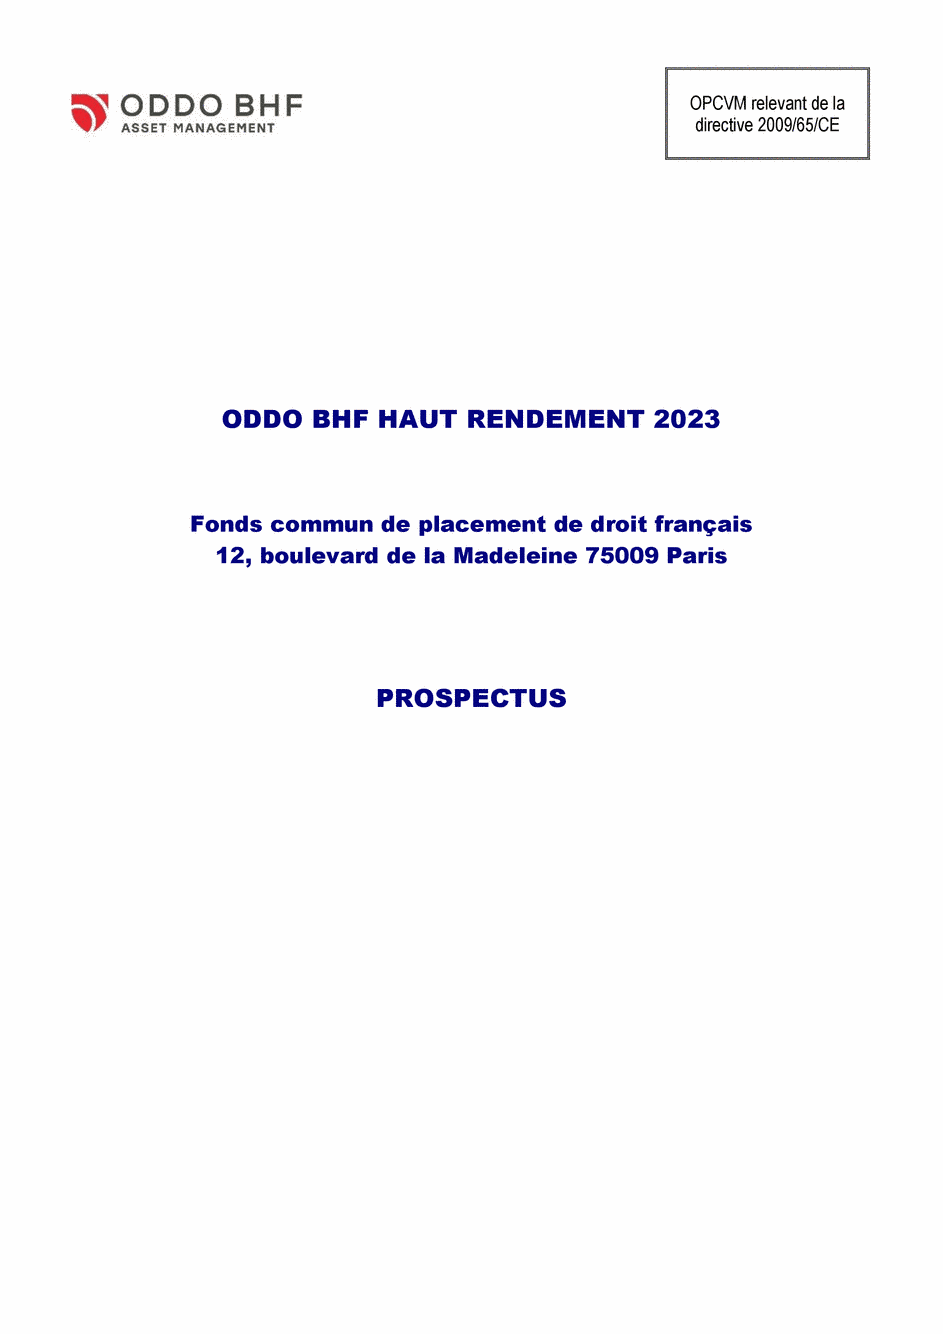 Prospectus ODDO BHF HAUT RENDEMENT 2023 CI-EUR - 14/02/2020 - Français